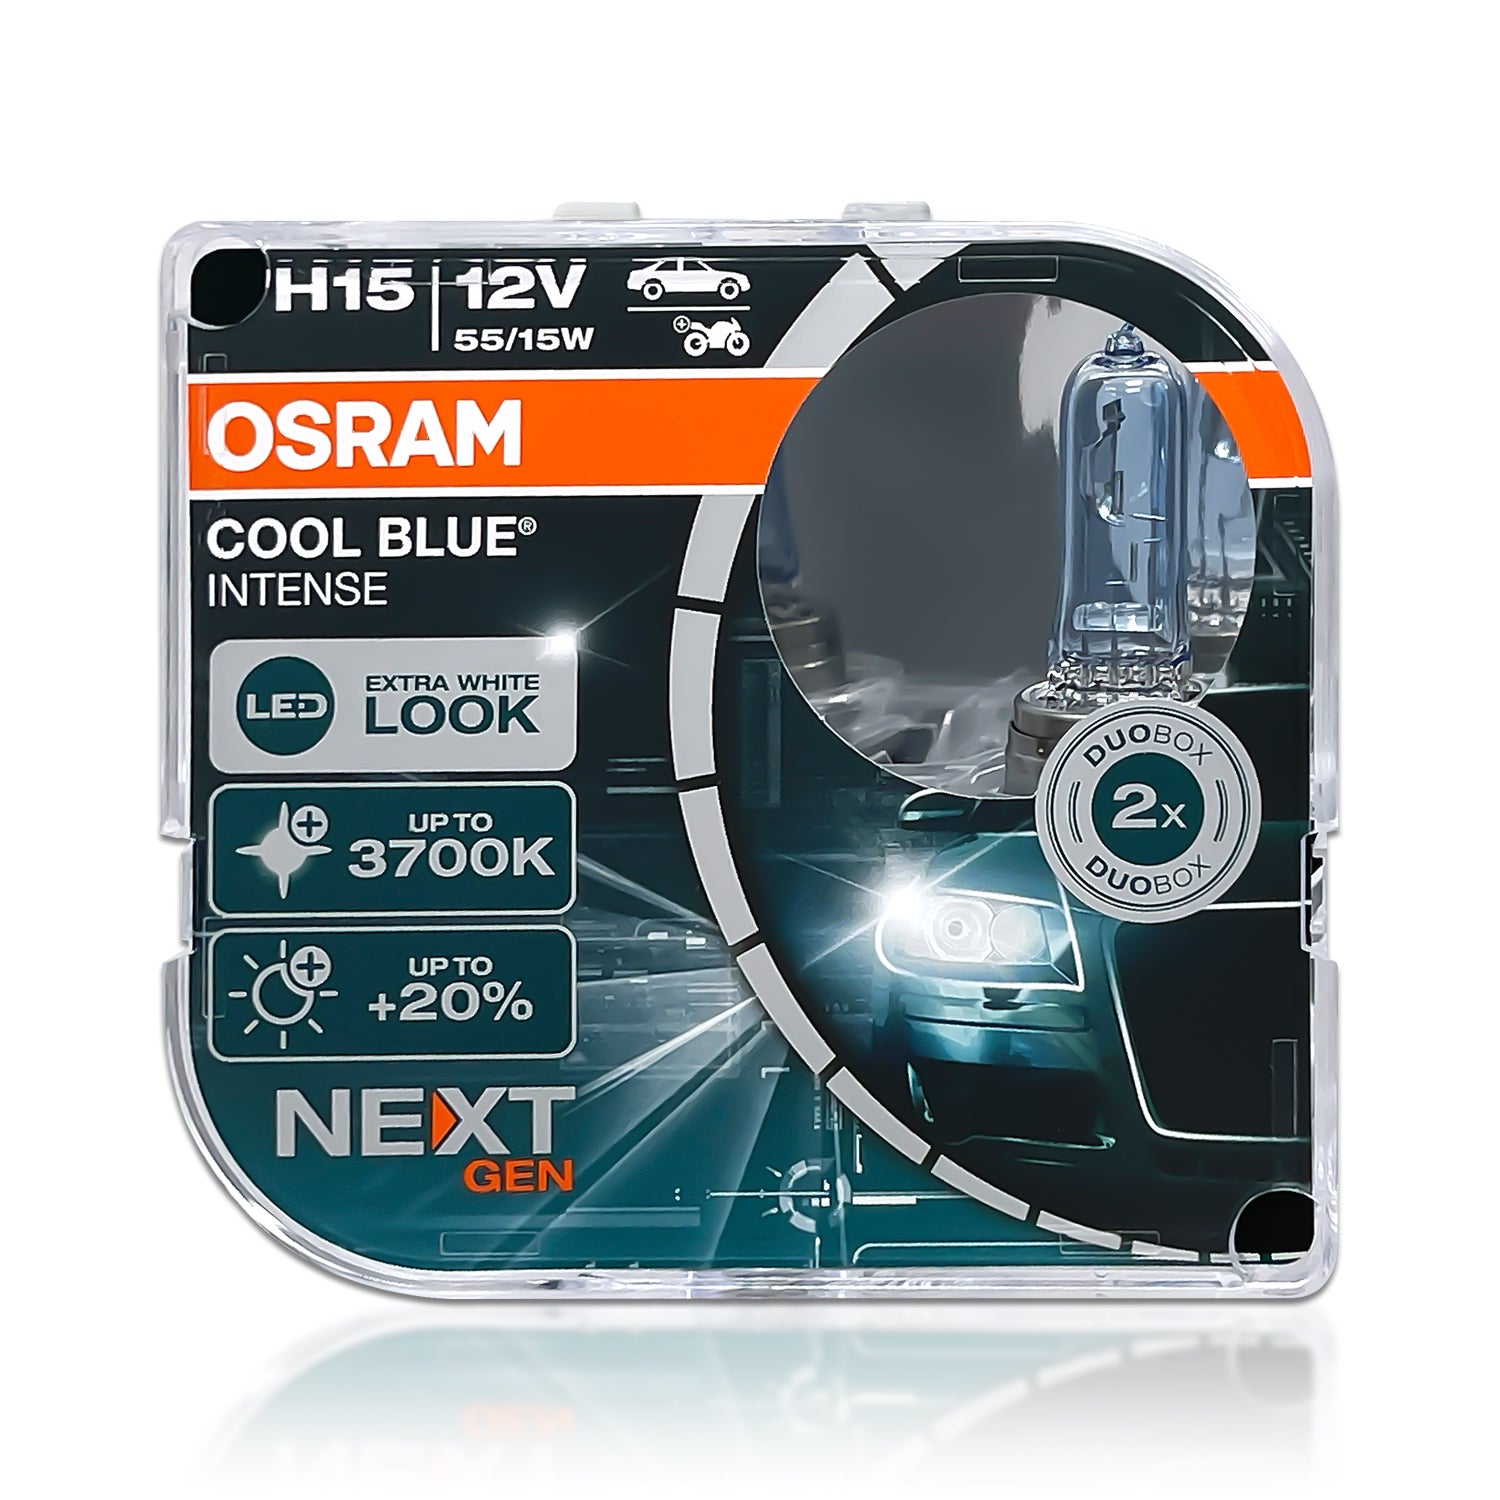 H15 Osram 64176 OEM Standard Halogen Bulbs